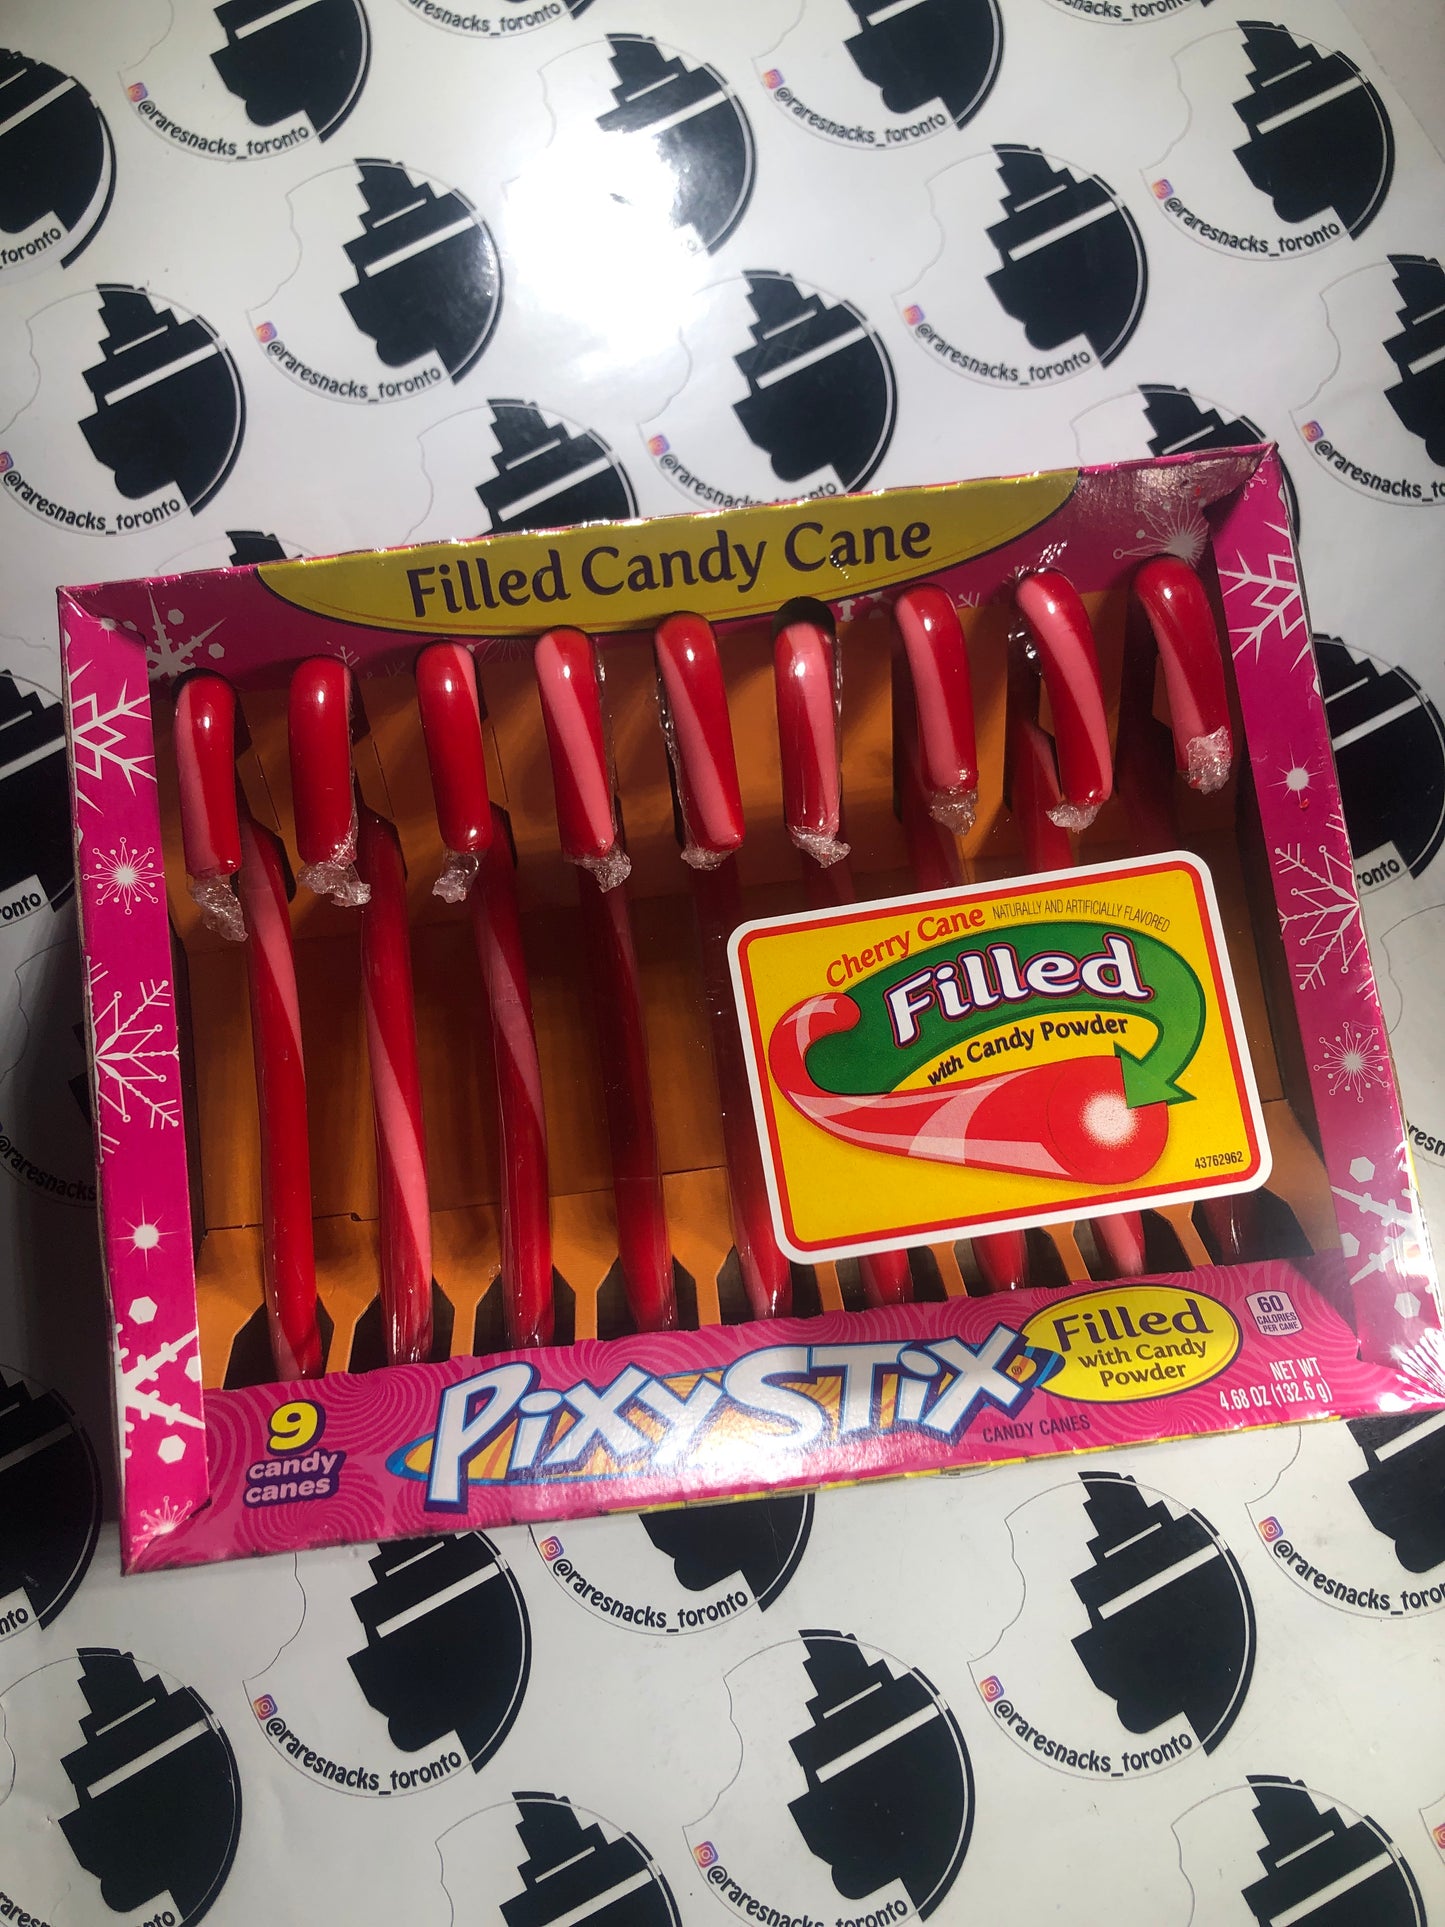 Pixy stix candy canes